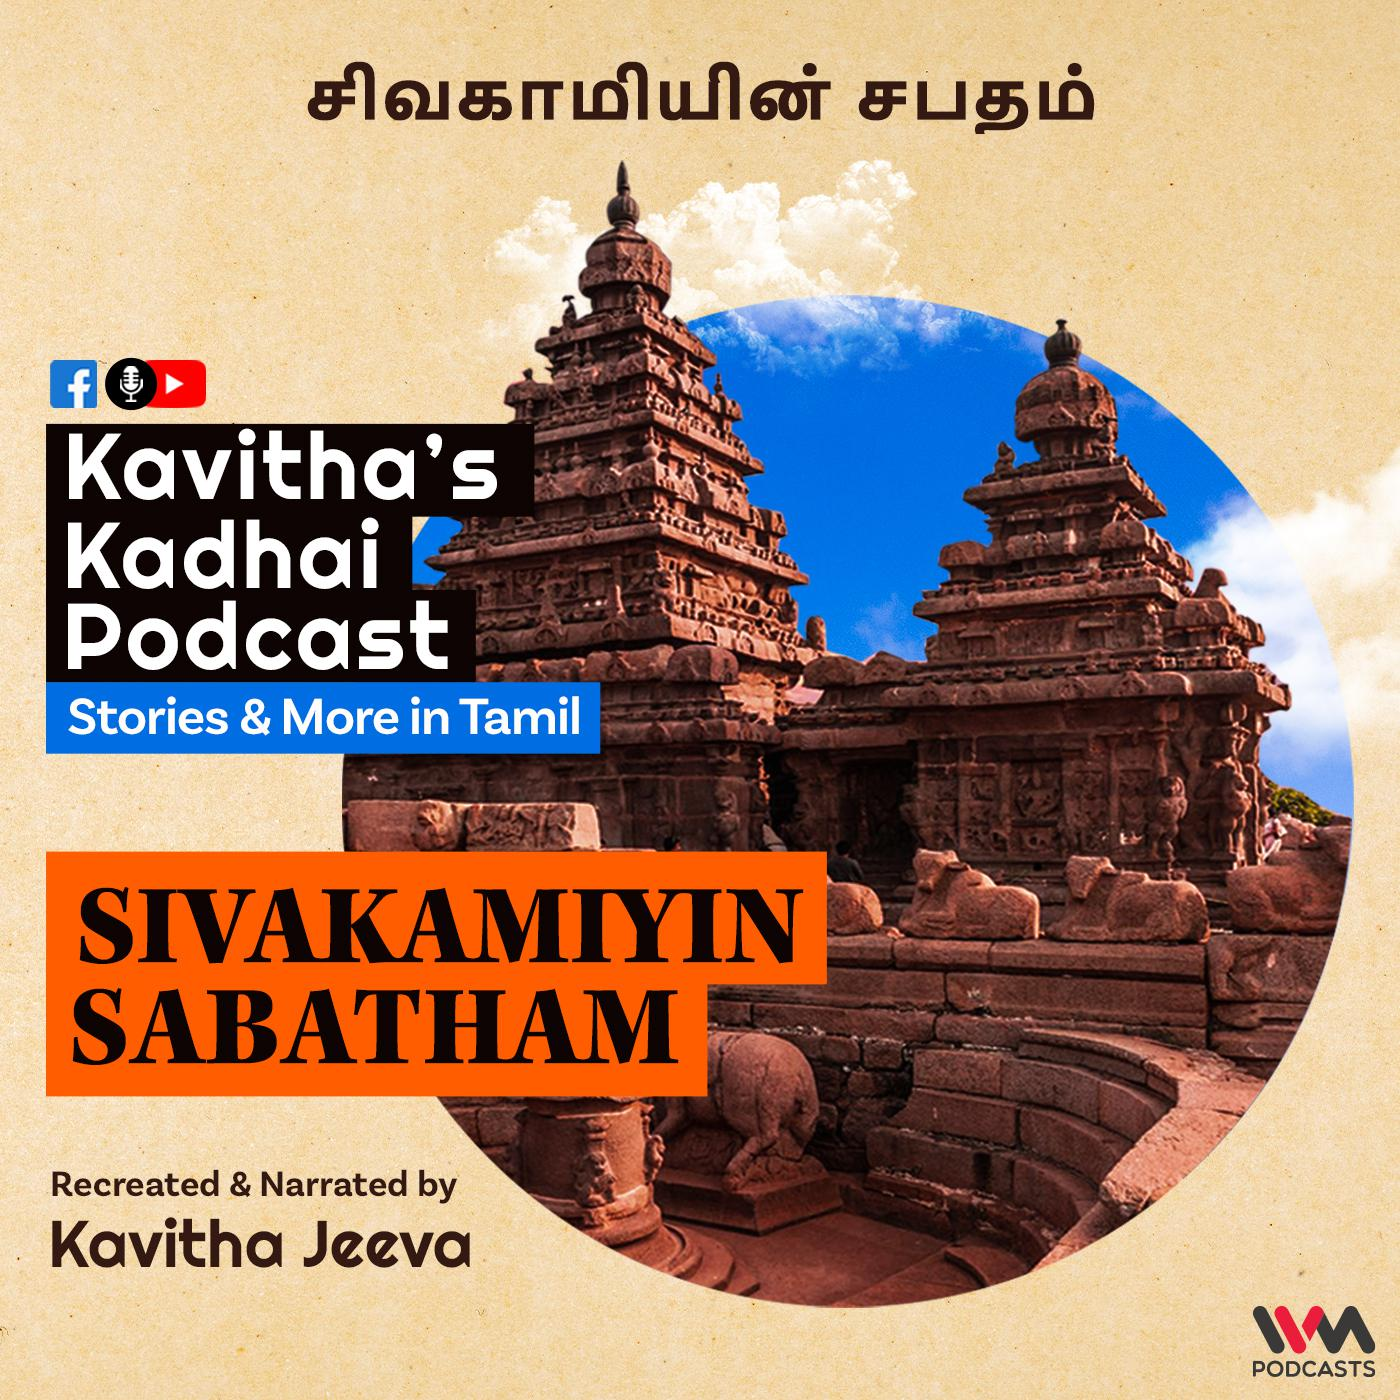 KadhaiPodcast's Sivakamiyin Sabatham with Kavitha Jeeva - Episode #121